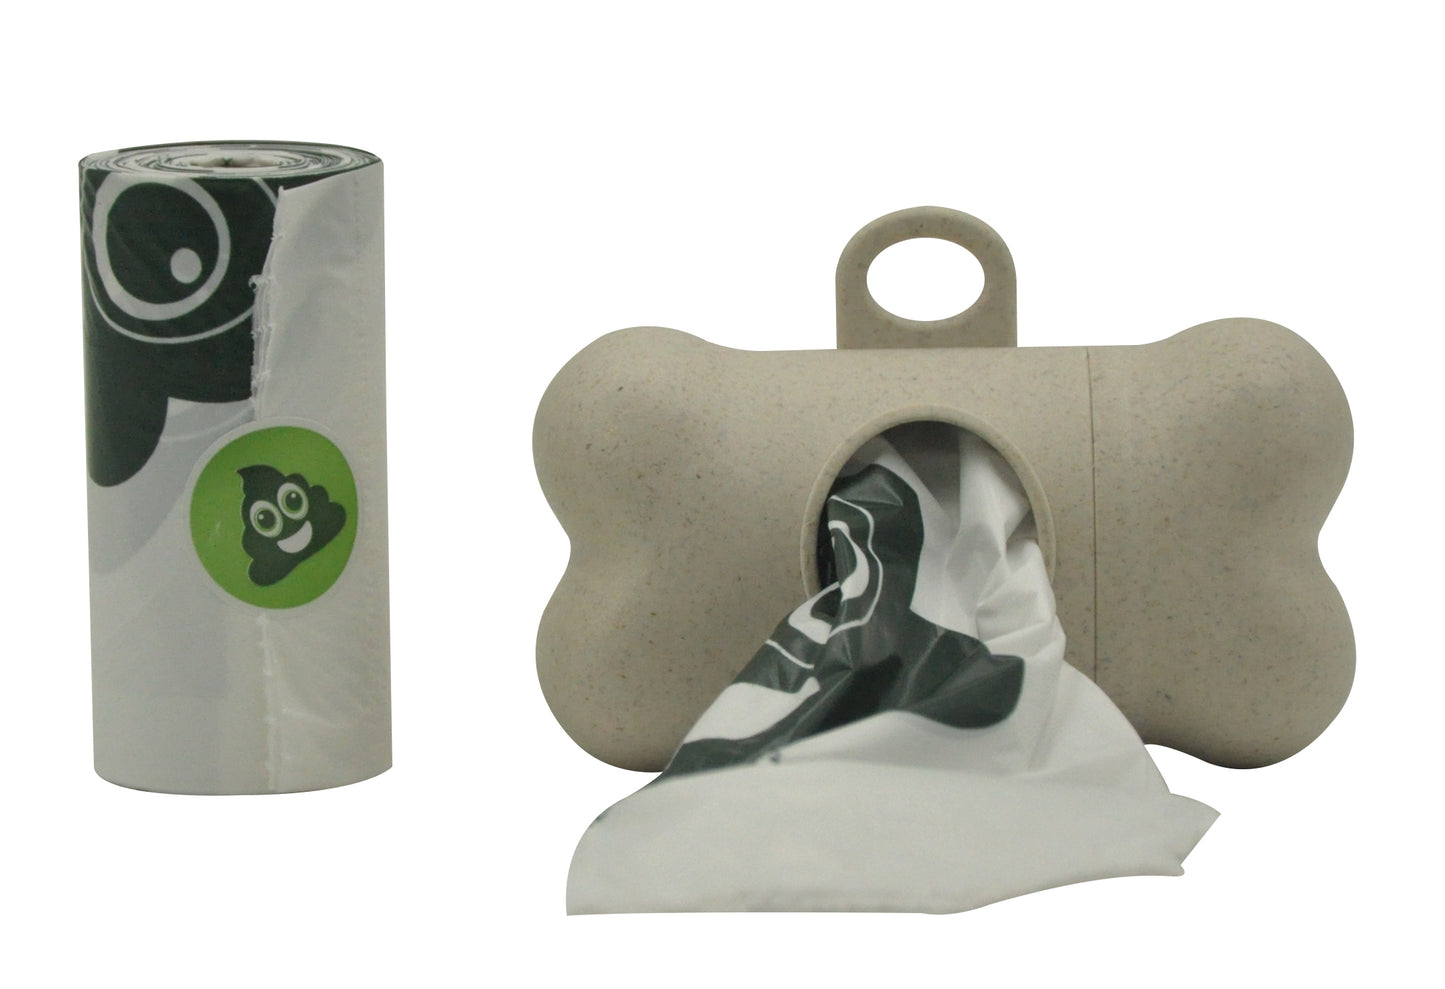 M-Pets Bamboo Waste Bag Dispenser